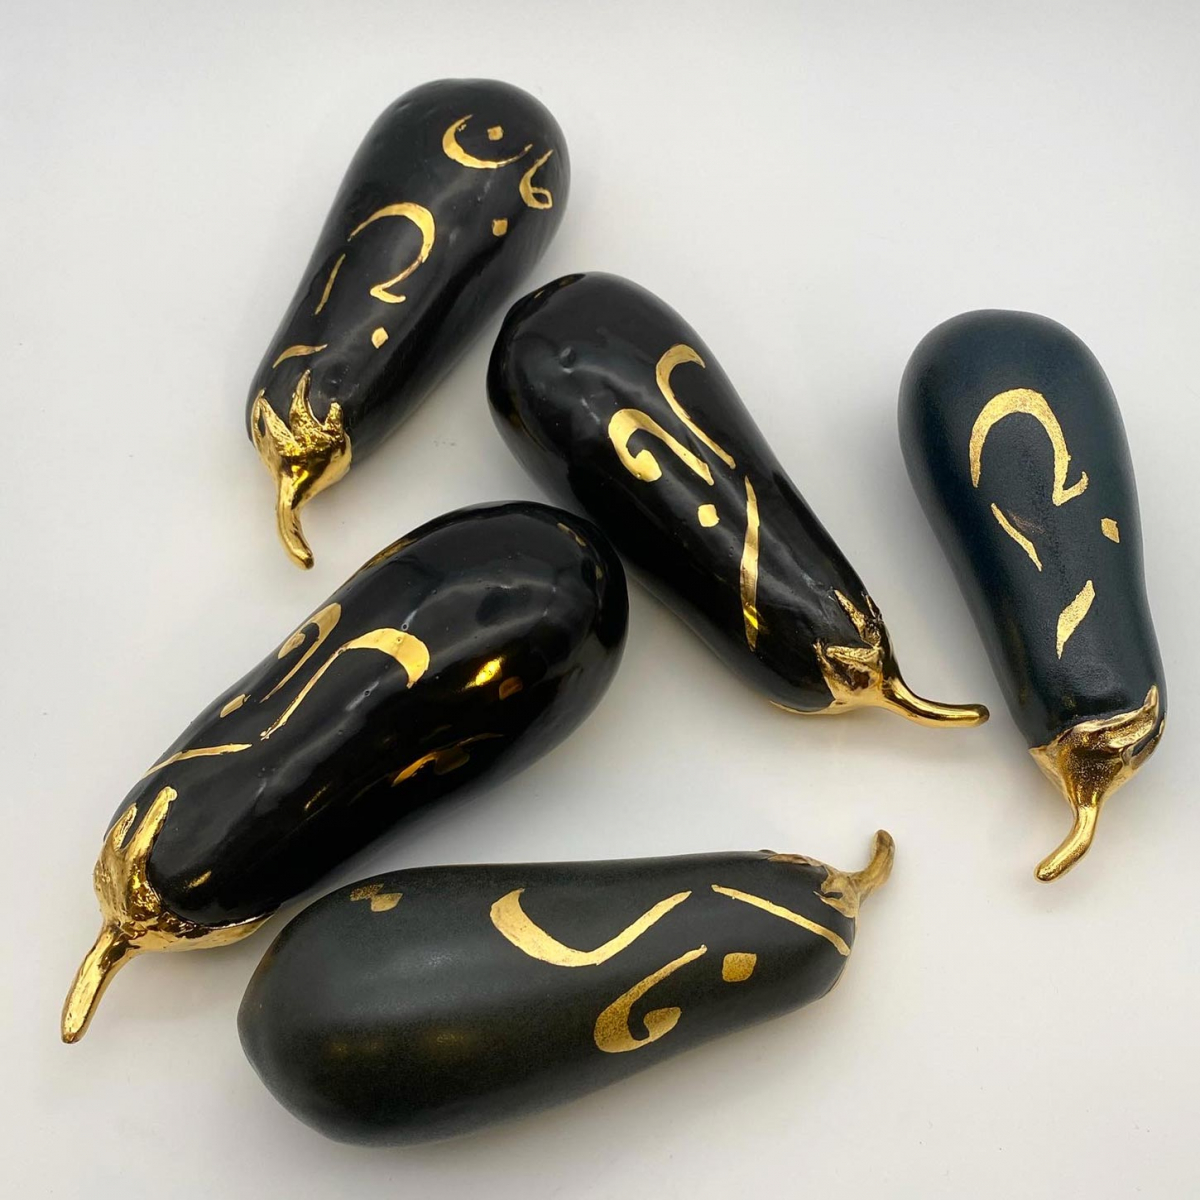 Black and gold eggplant sculpture